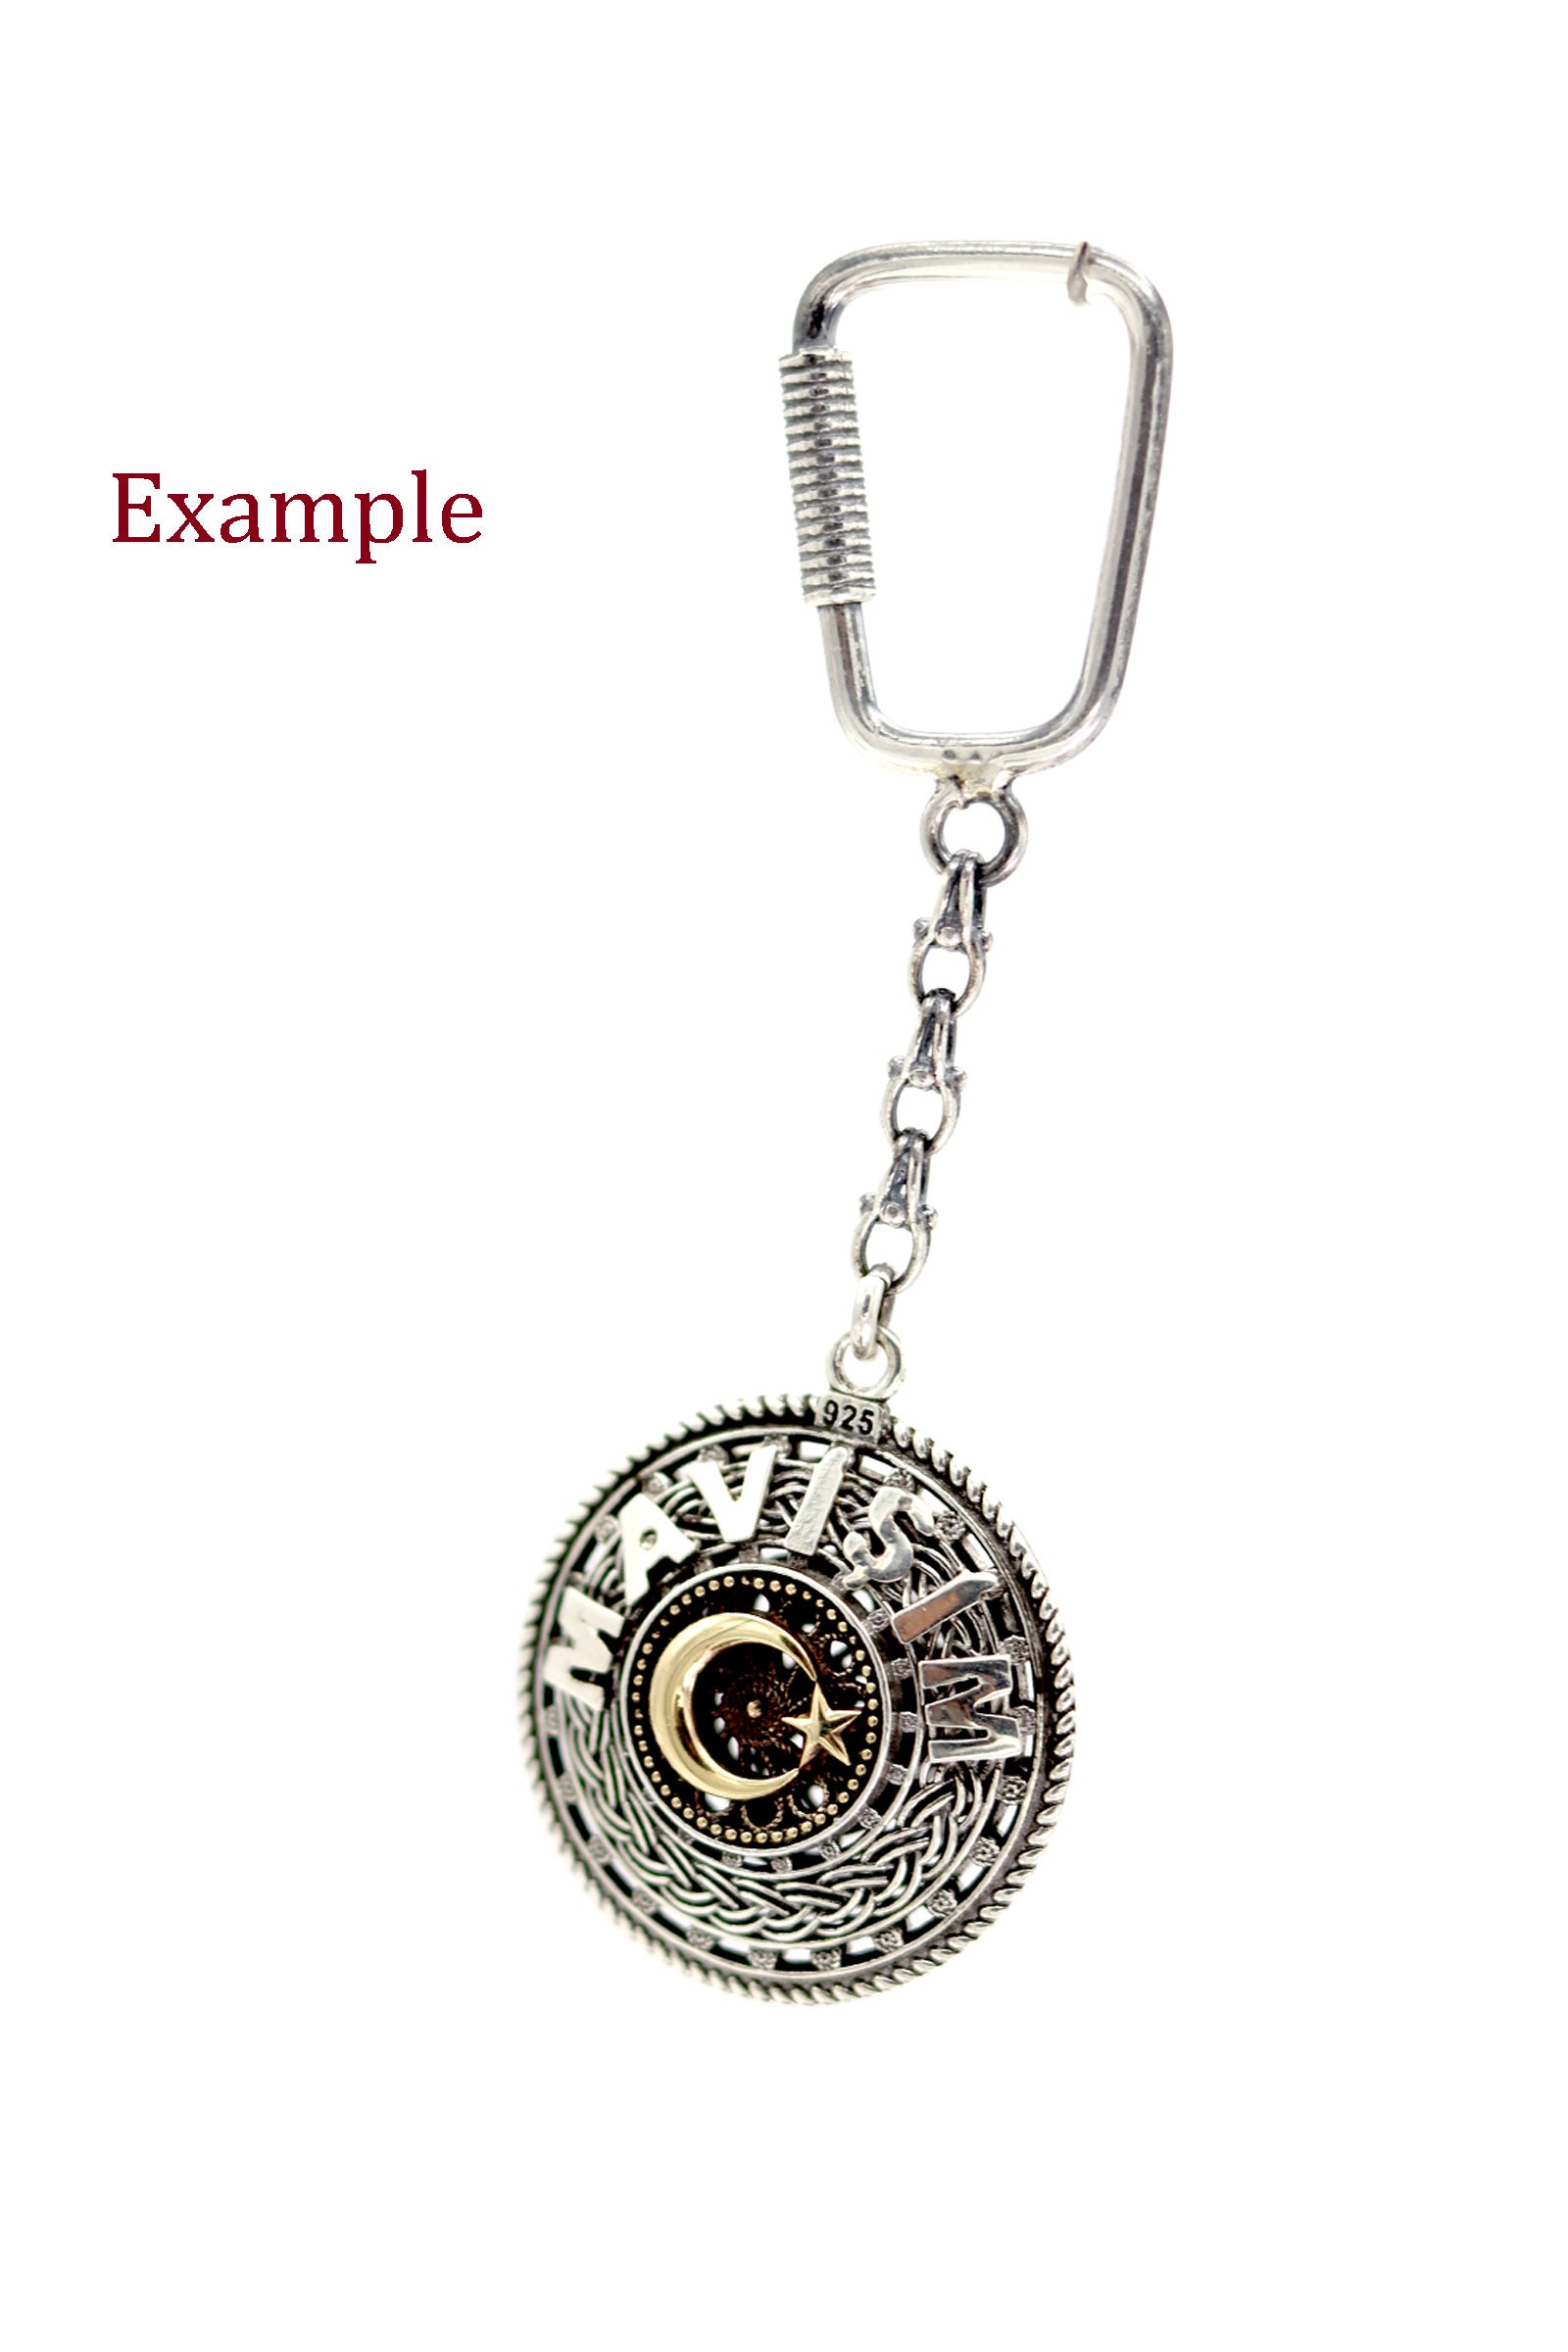 Filigree Keychain Made of 925 Sterling Silver, Handmade Key Holder